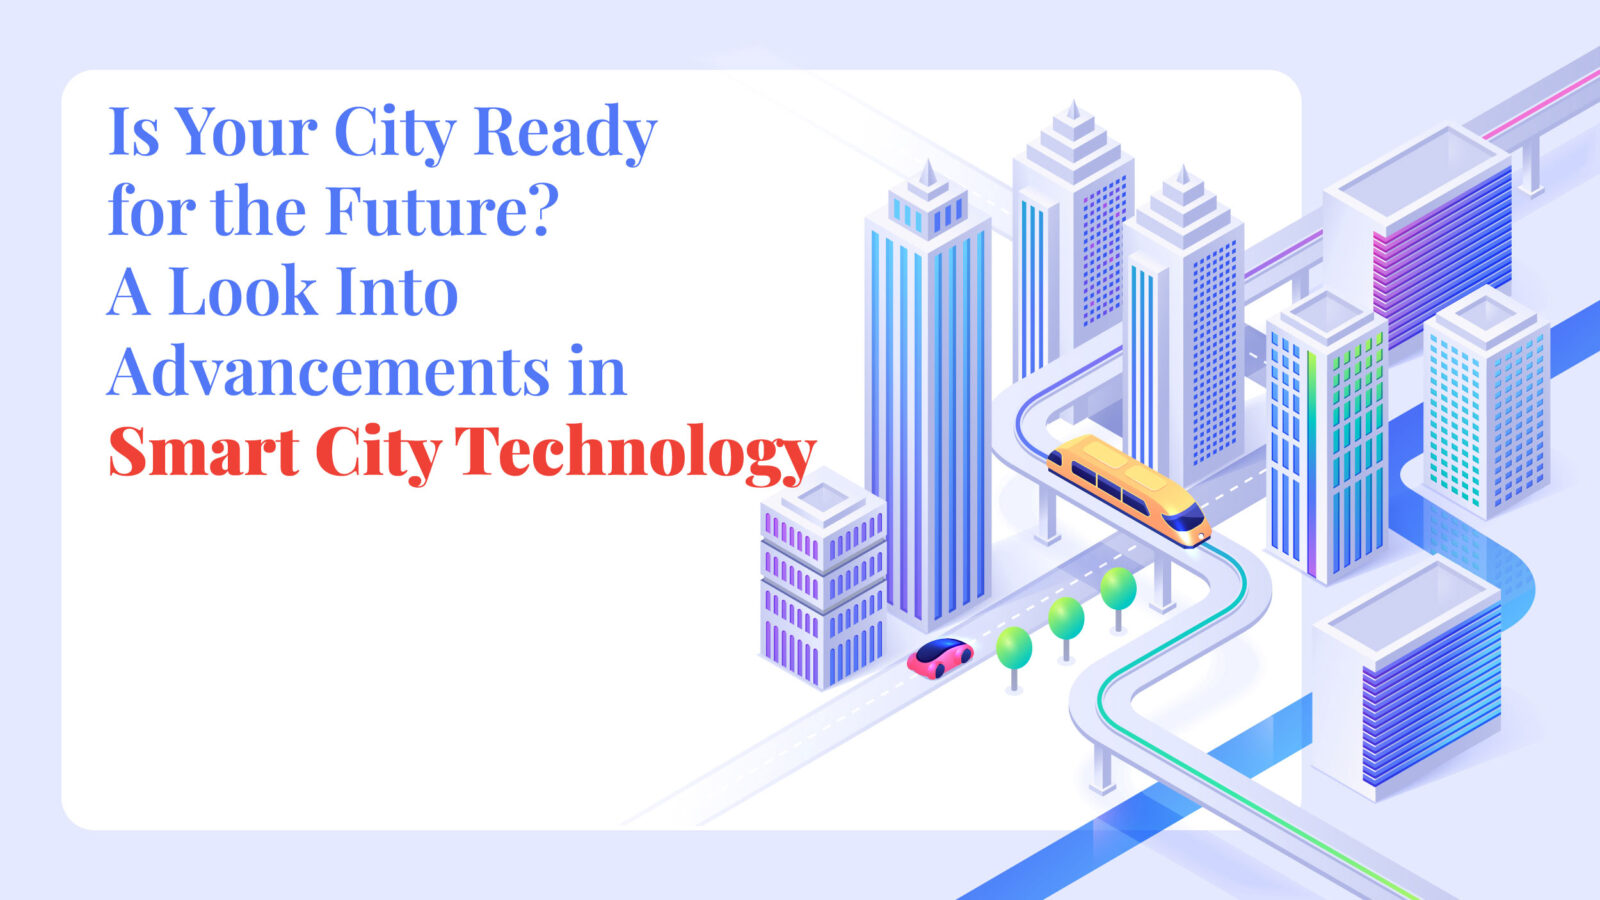 Smart City Technology